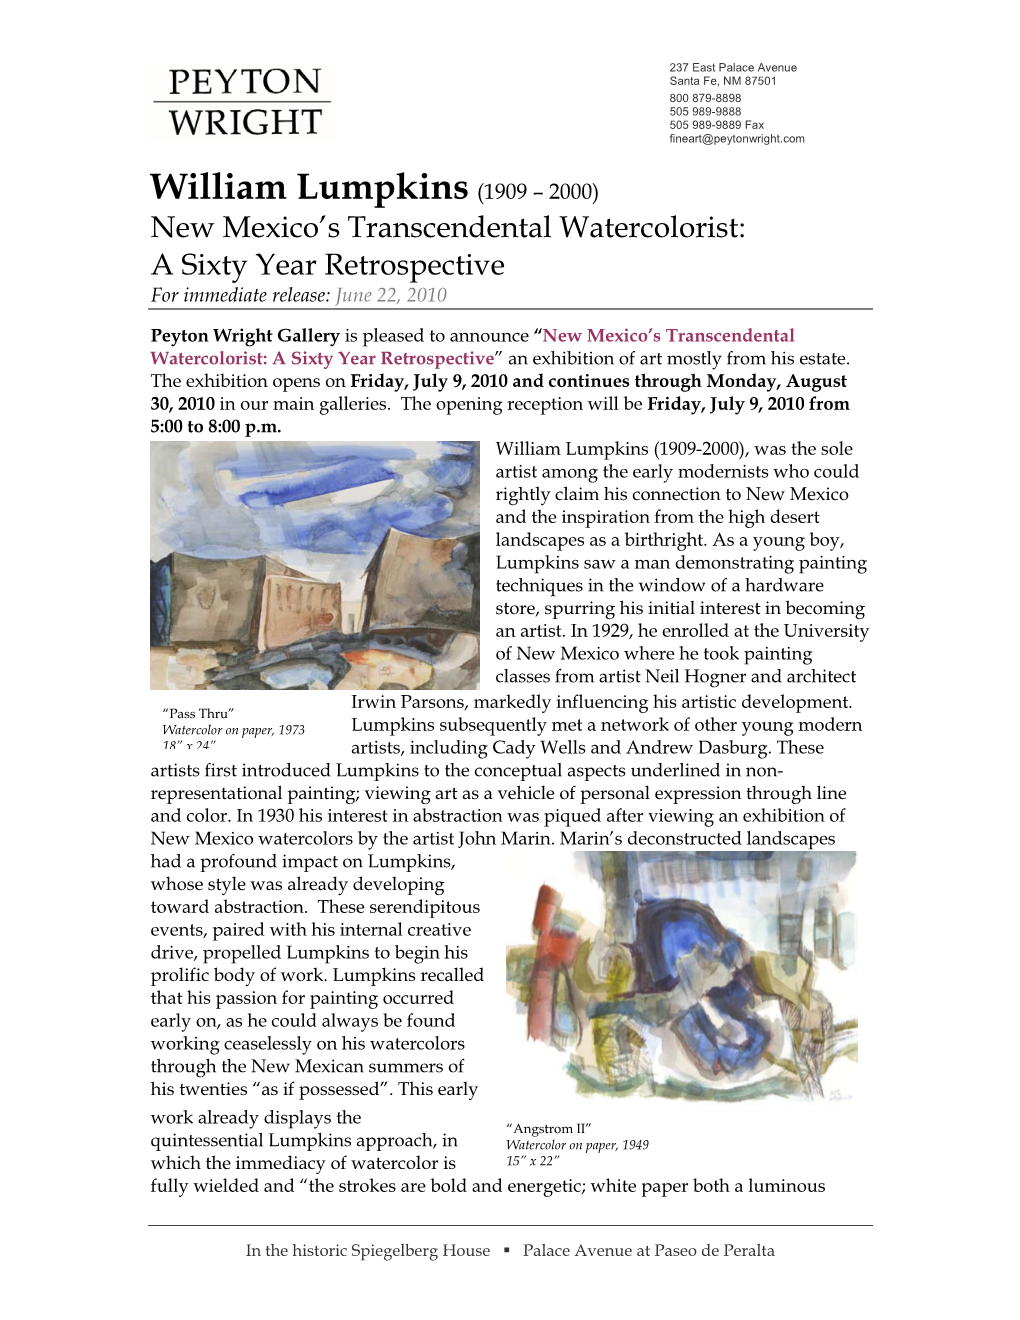 William Lumpkins 2010 Exhibition Press Release